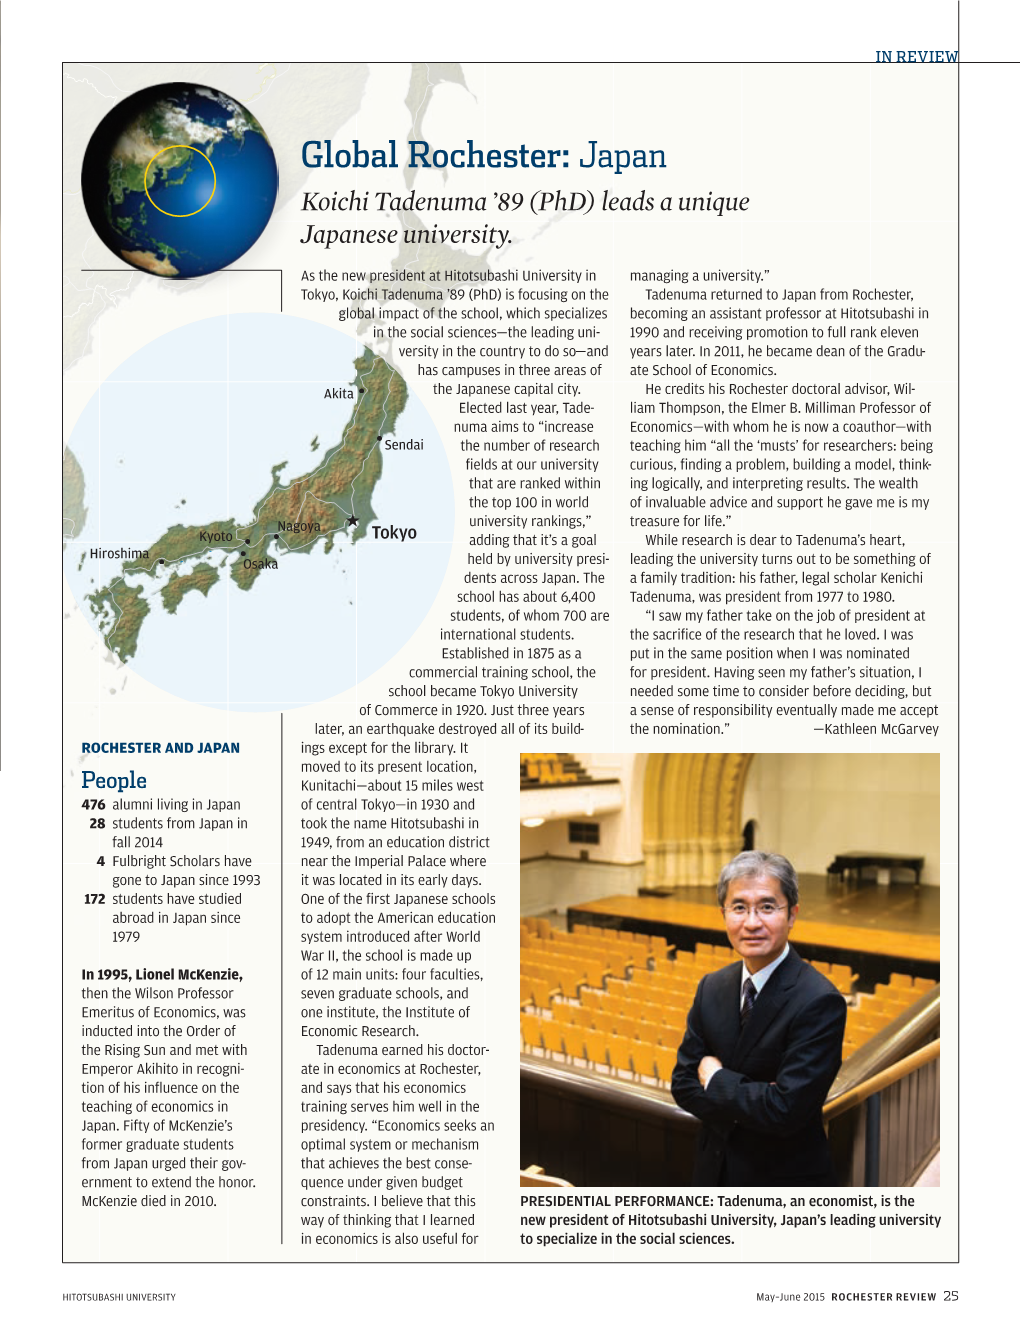 Japan Koichi Tadenuma ’89 (Phd) Leads a Unique Japanese University